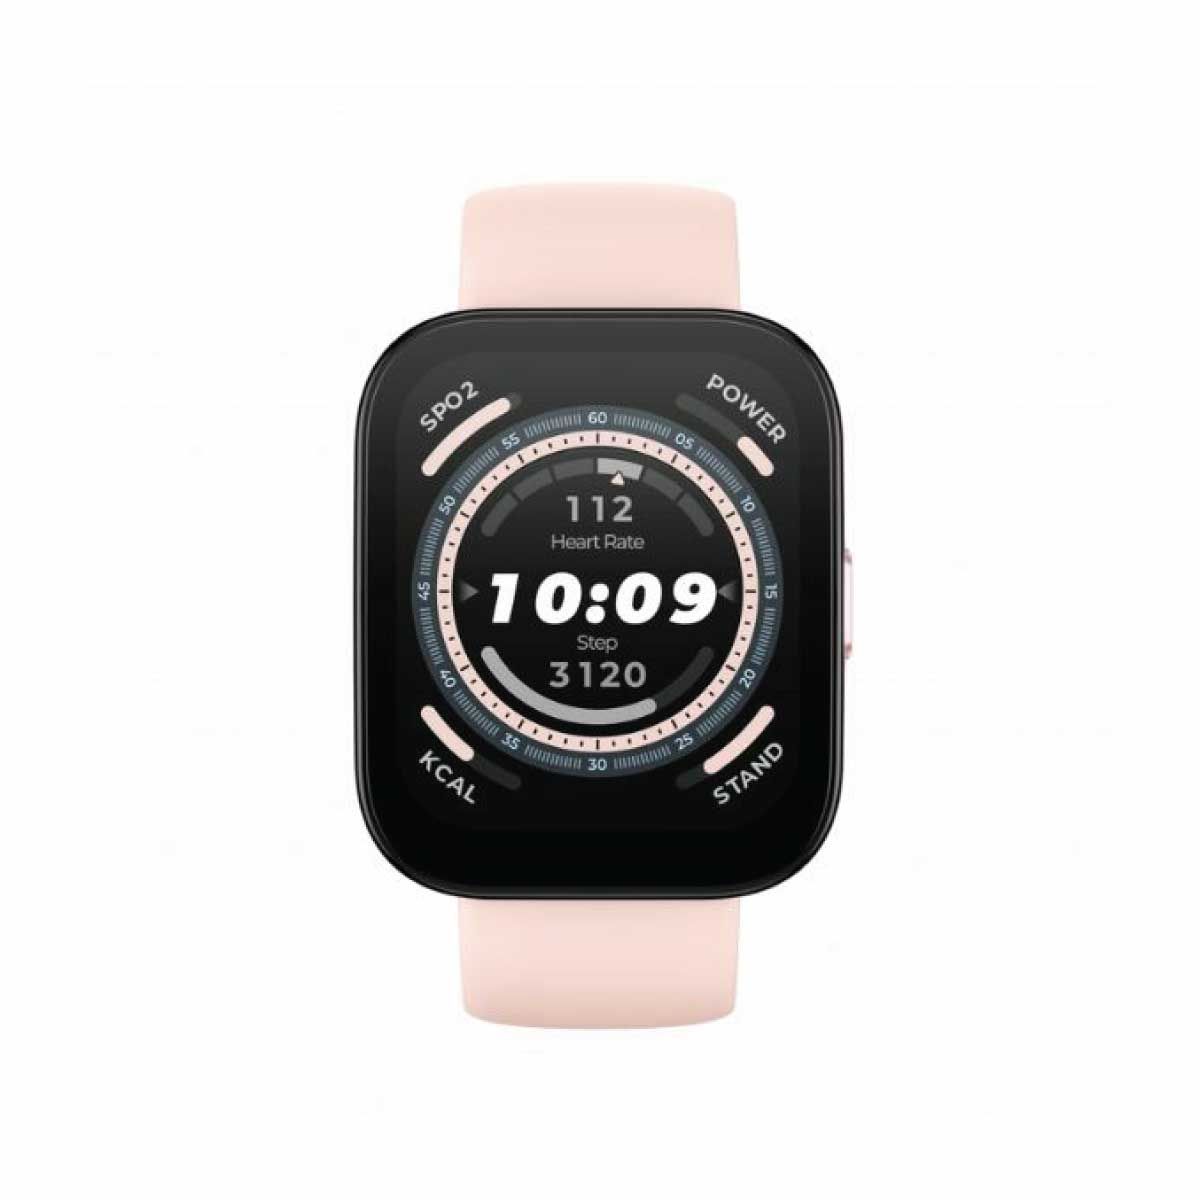 Amazfit Bip 5 Pink   นาฬิกาสมาร์ทวอทช์  รองรับ GPS เชื่อมต่อดาวเทียมได้ 4 ดวง